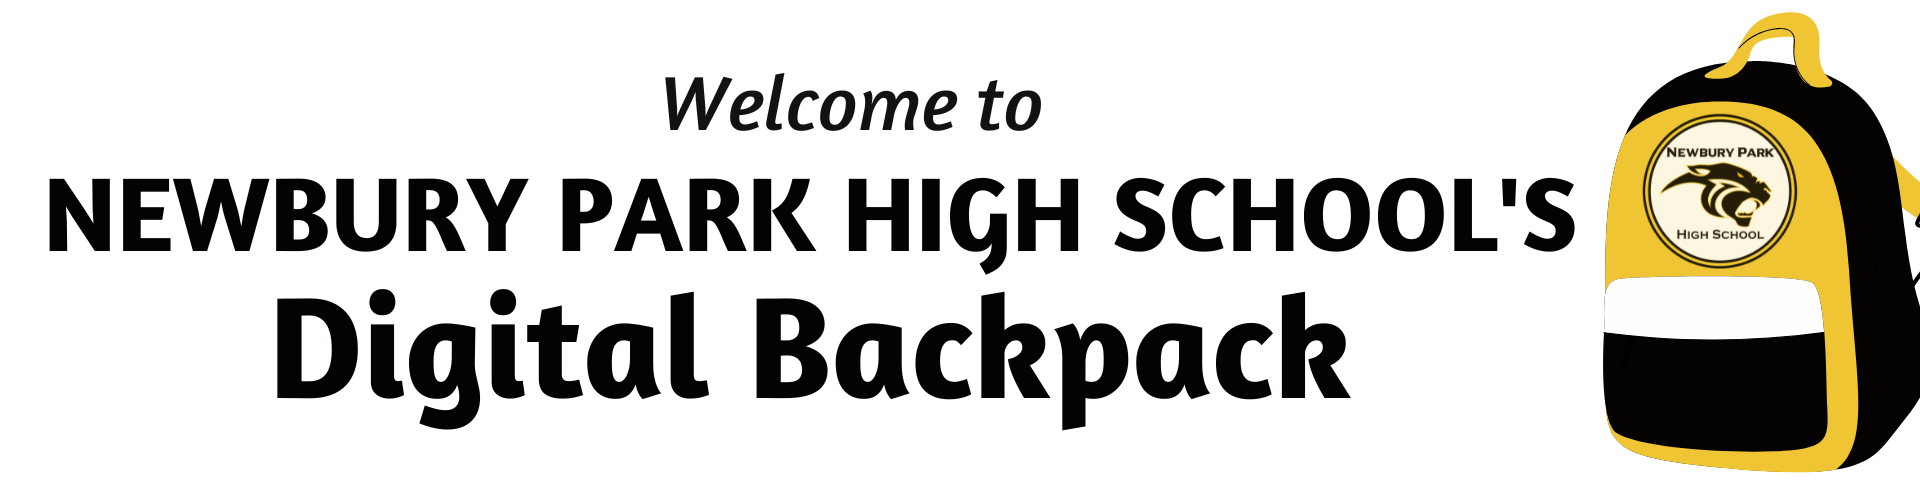 Welcome to Newbury Park High School's Digital Backpack